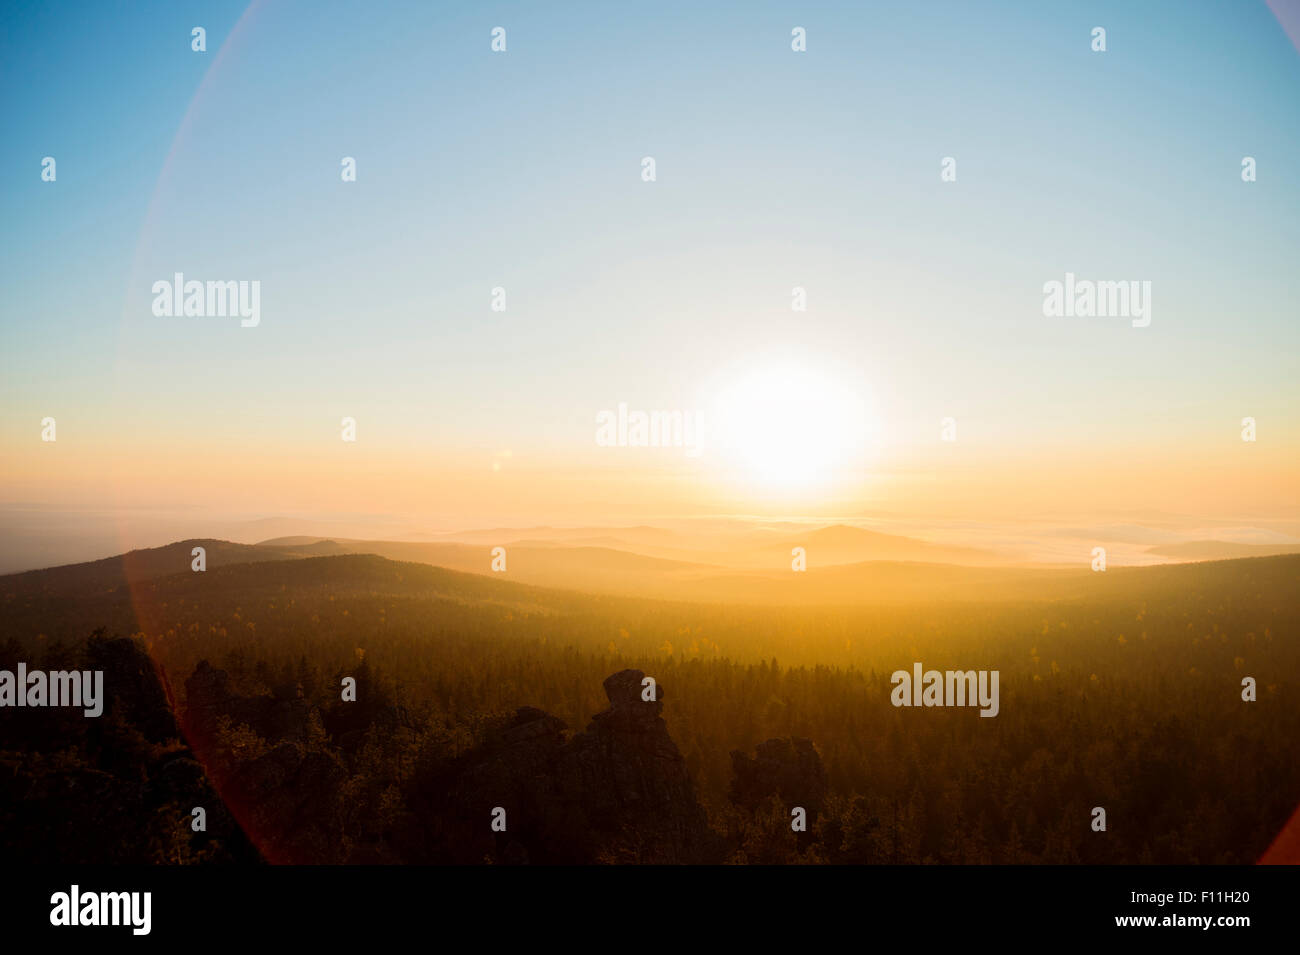 Sonnenaufgang über dem Hügel in abgelegenen Landschaft Stockfoto